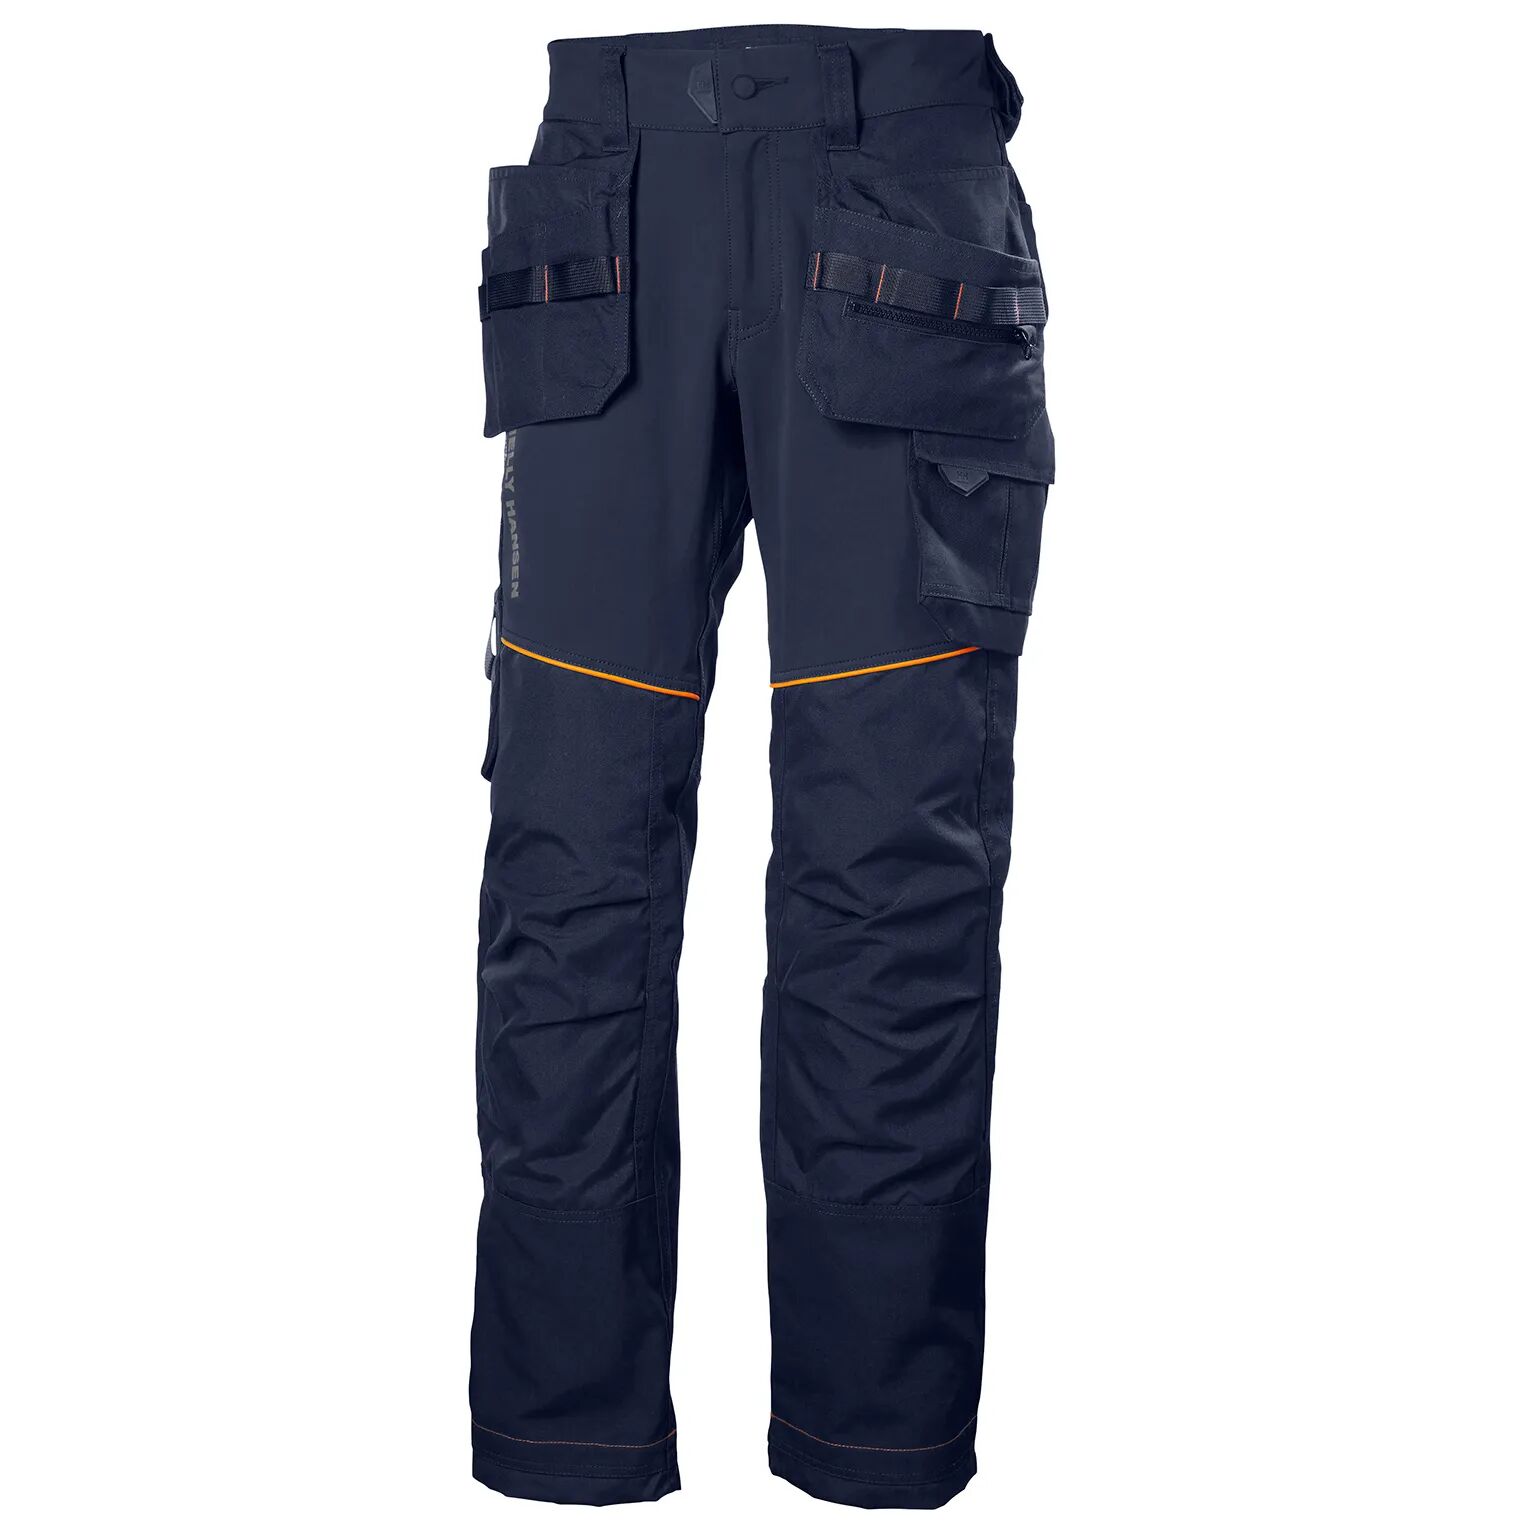 HH Workwear Helly Hansen WorkwearChelsea Evolution Construction Pants Navy 34/32